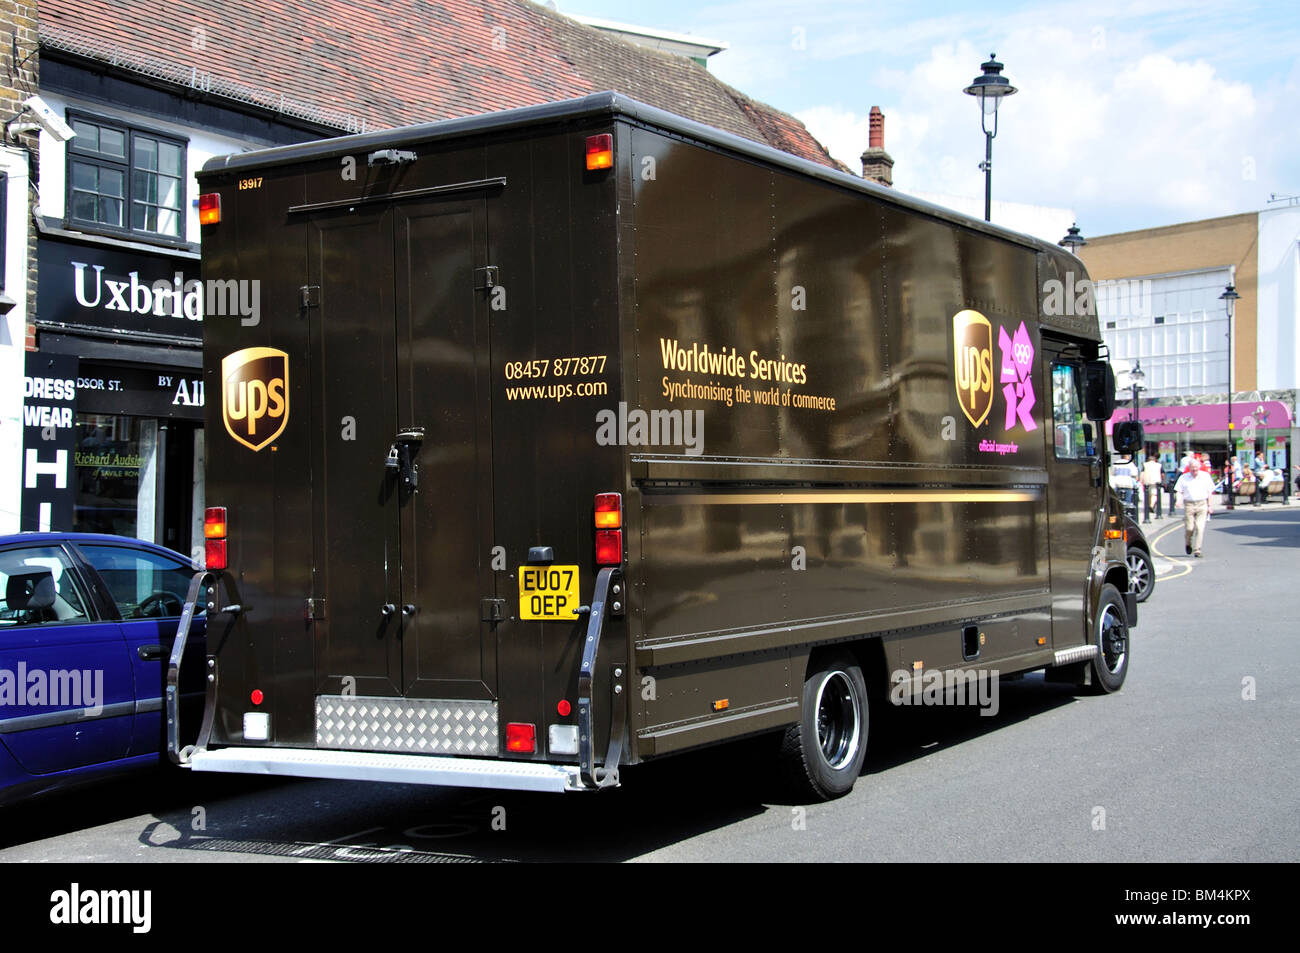 Consegna UPS van, Windsor Street, Uxbridge, London Borough of Hillingdon, Greater London, England, Regno Unito Foto Stock